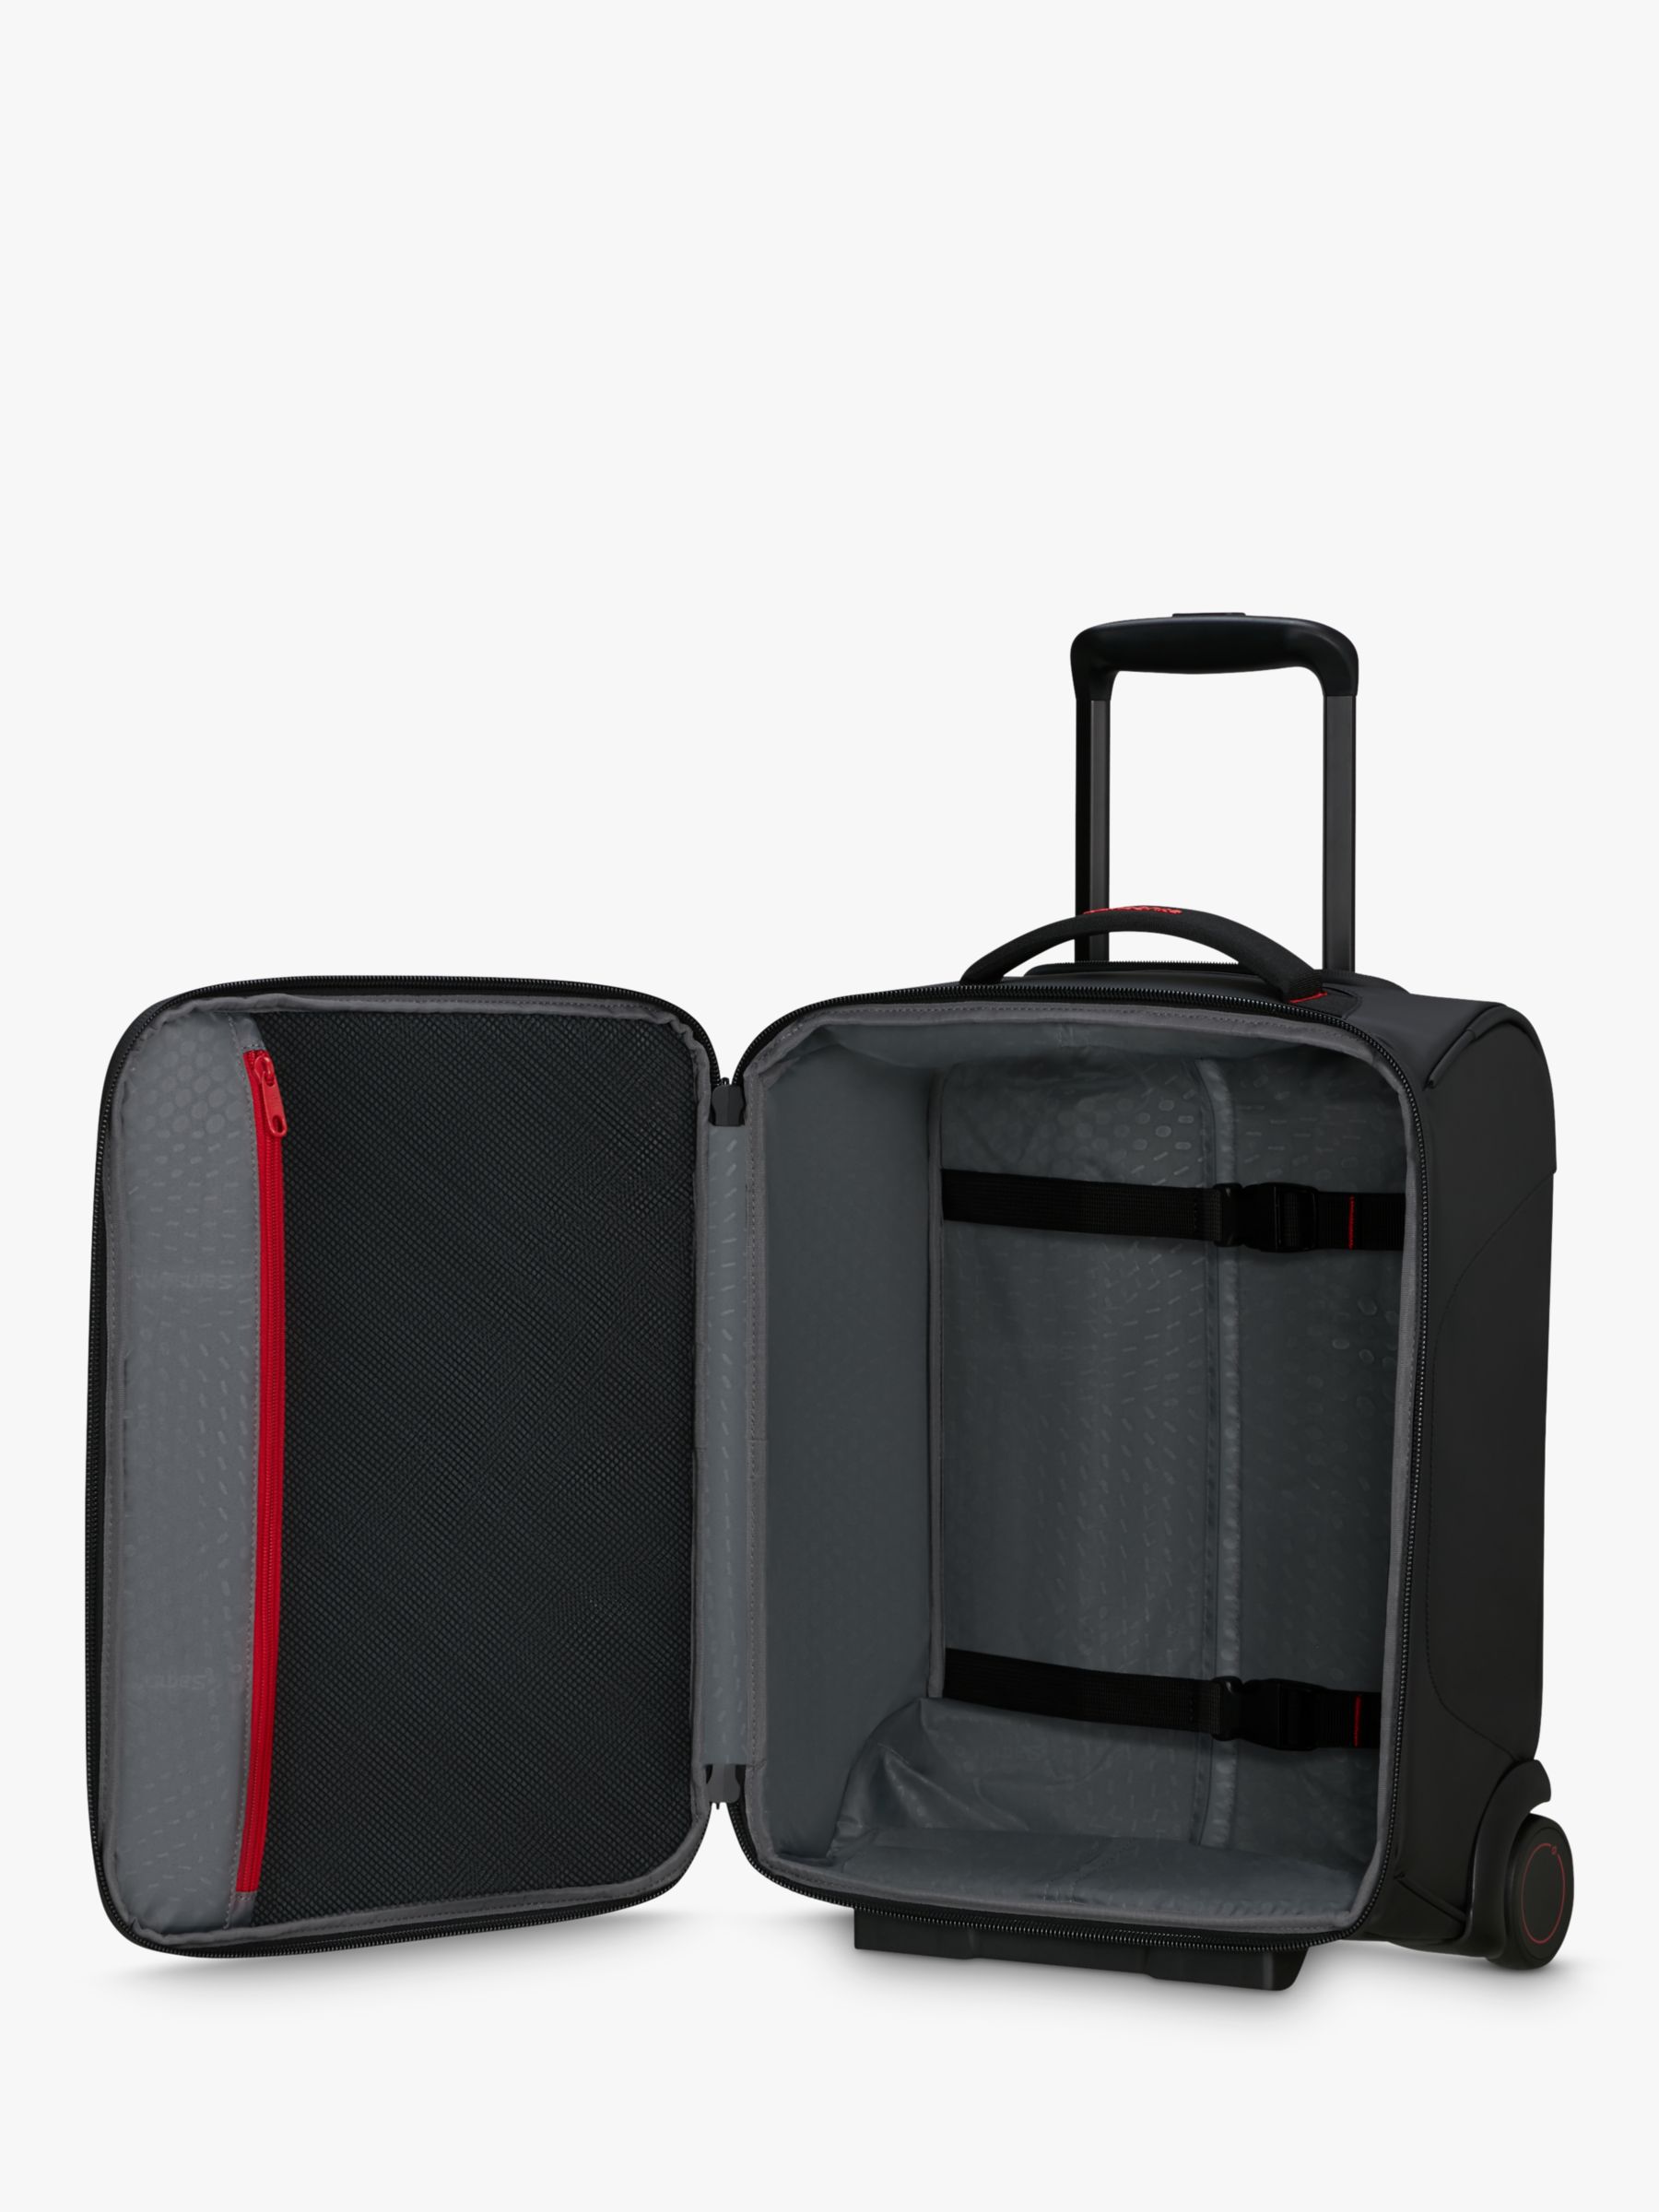 Buy Samsonite Ecodiver Underseater 2 Wheel Duffle Bag, Black Online at johnlewis.com